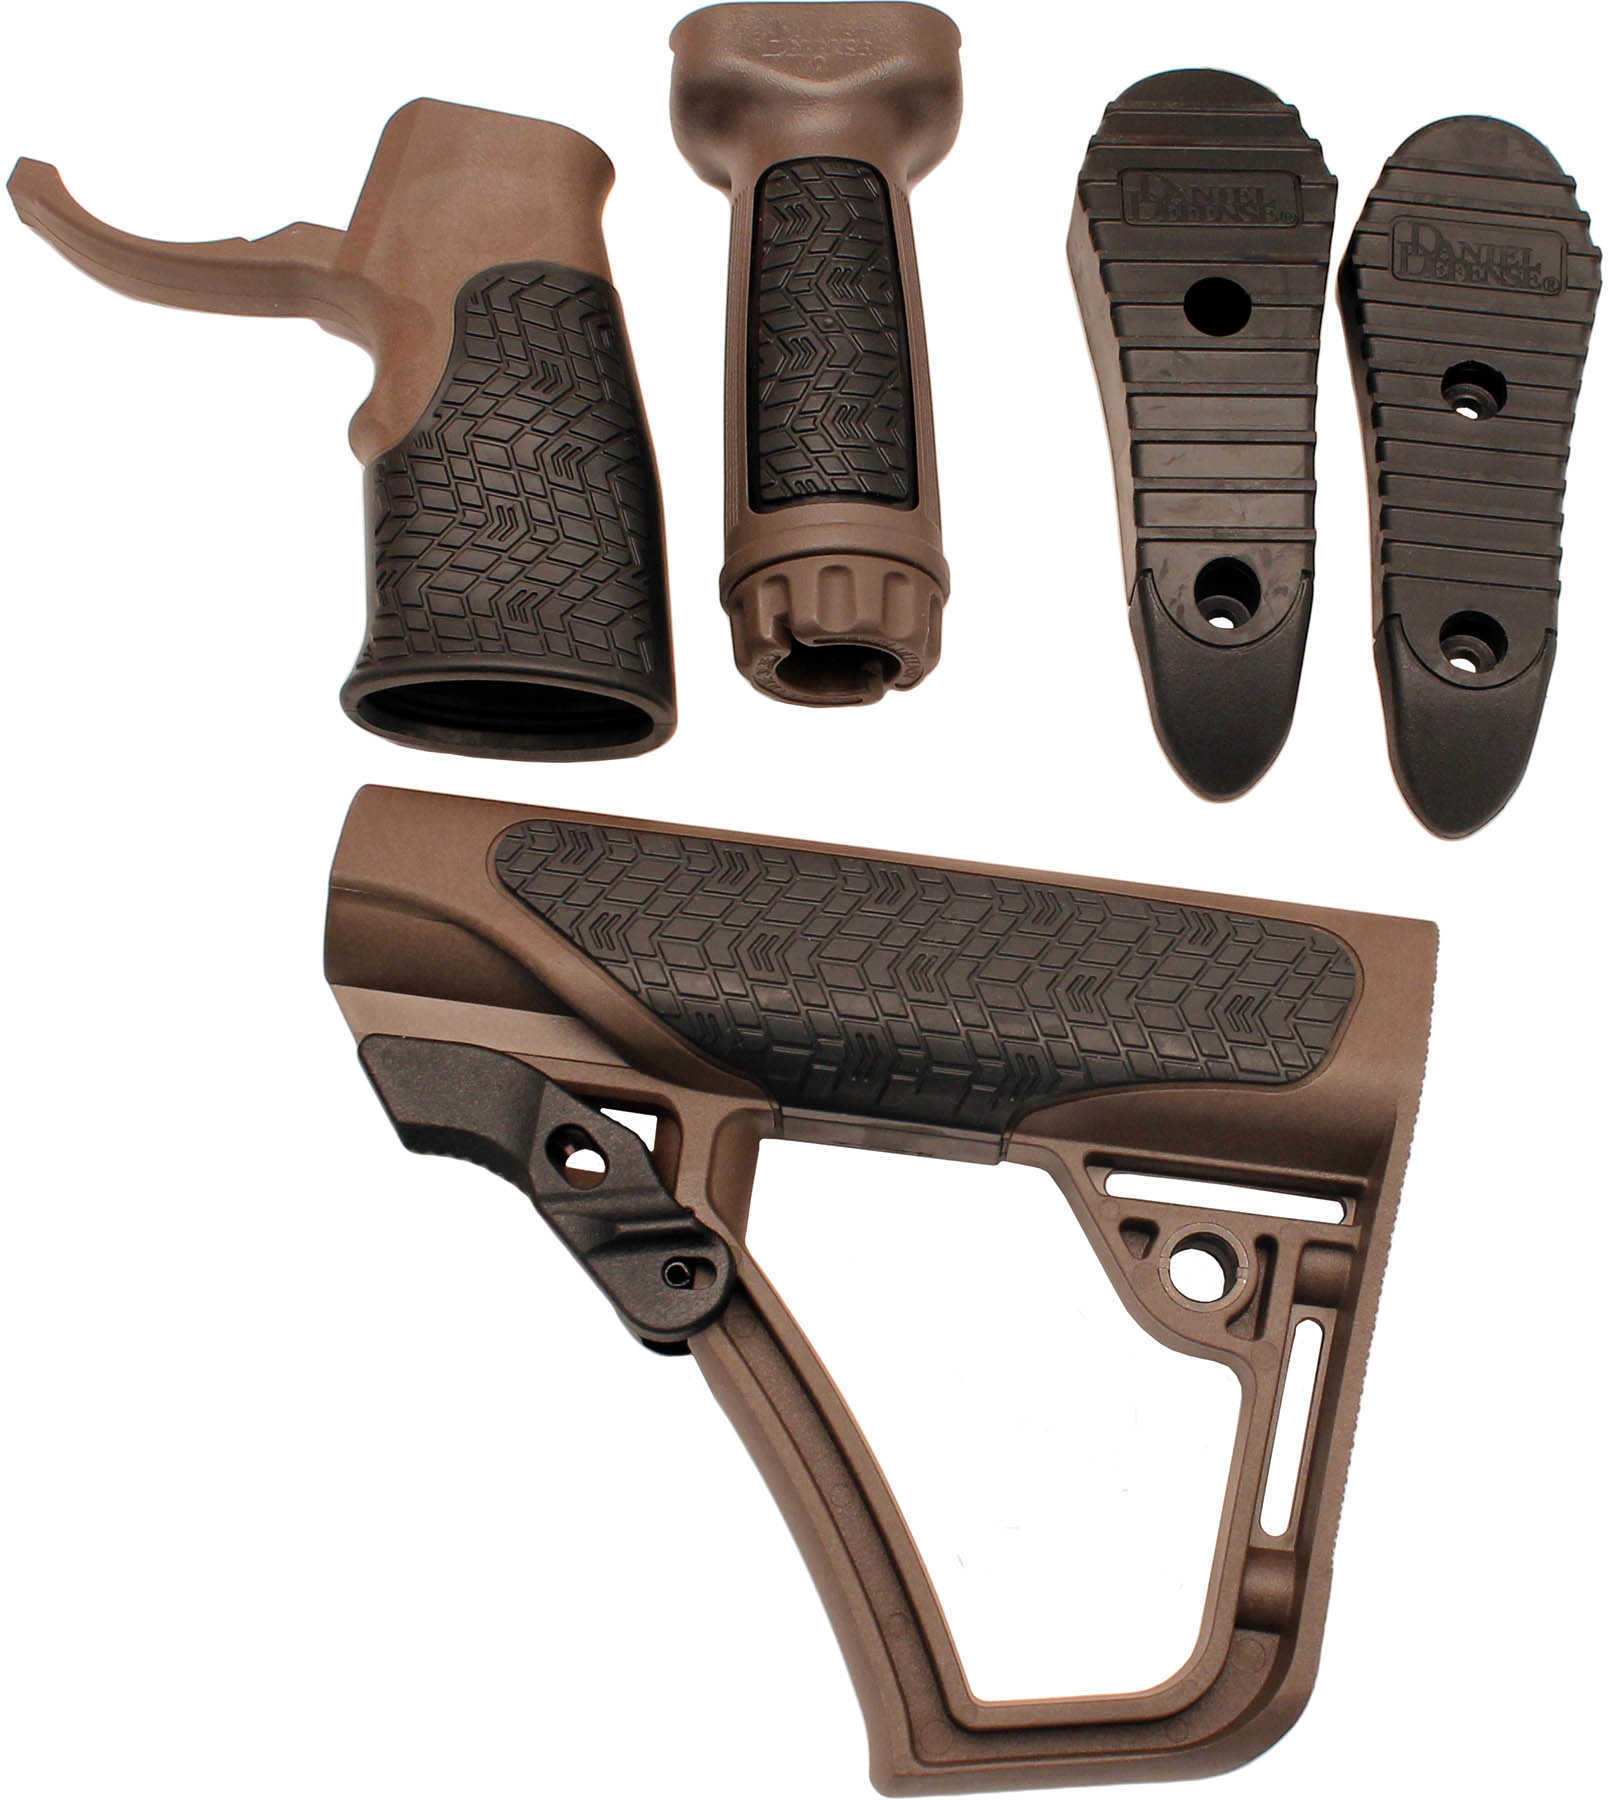 Daniel Defense Def. AR15 Furniture Kit Tornado Grey Mil-Spec